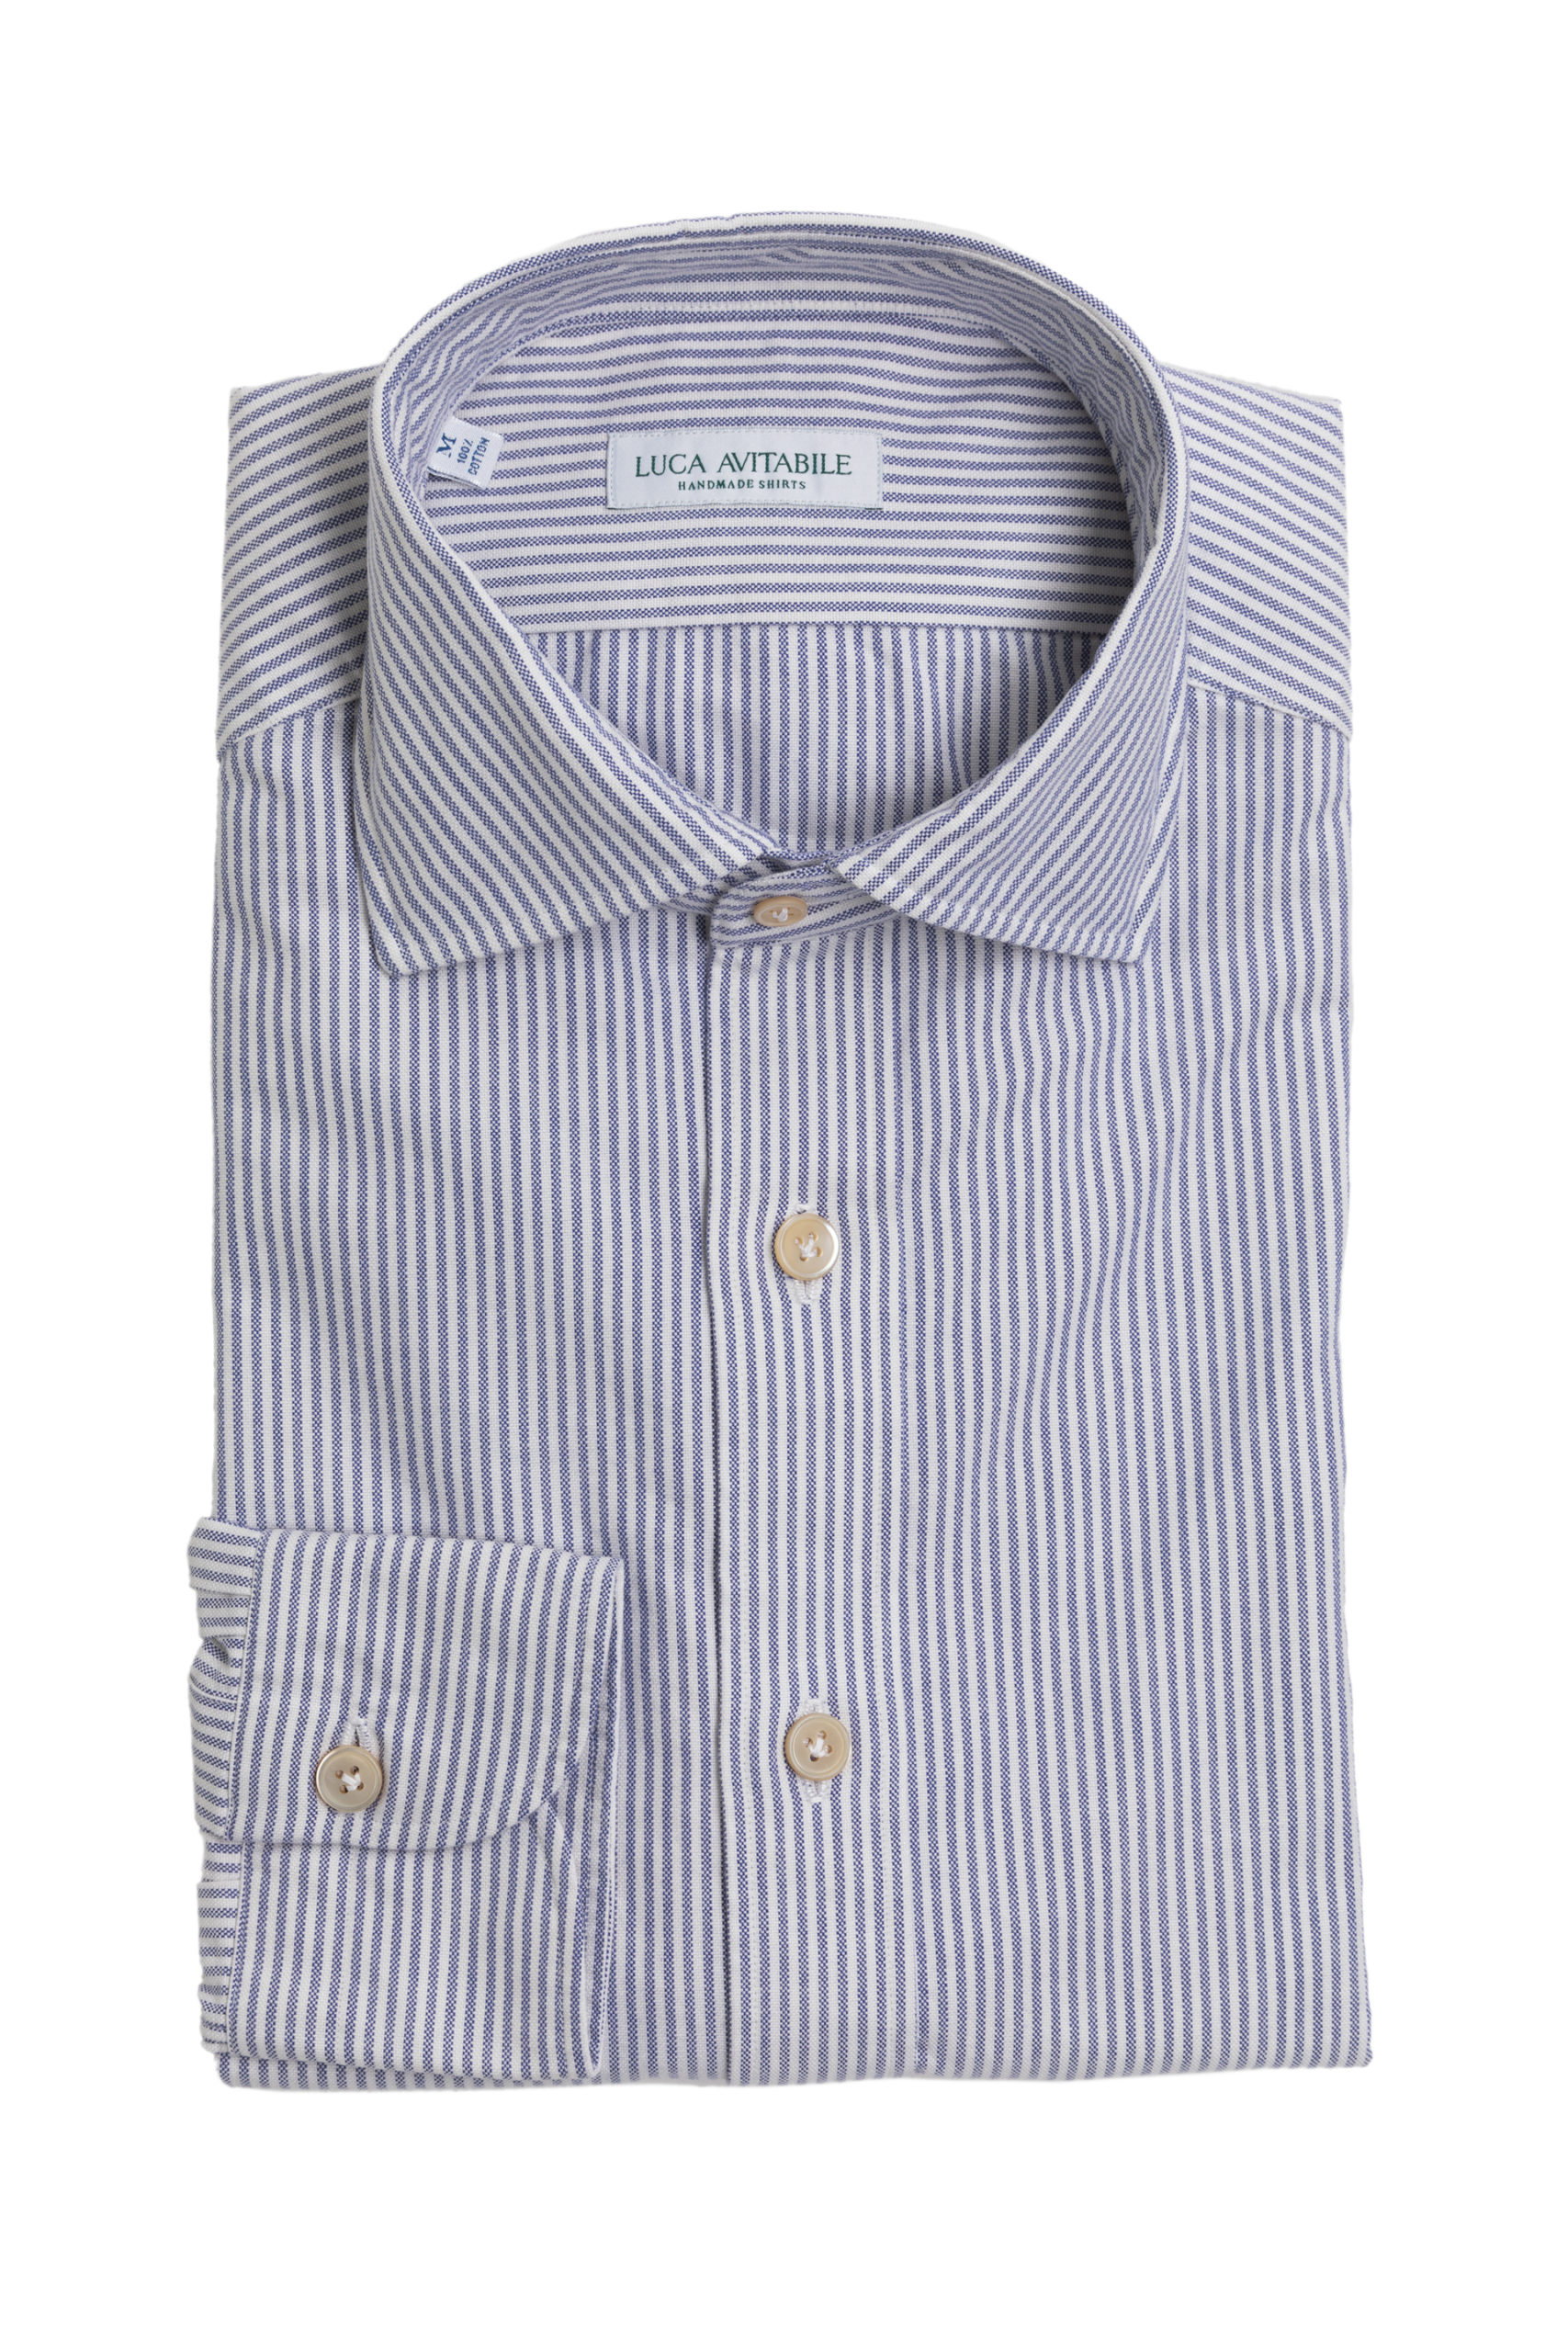 Washed Oxford - Striped Shirt - Luca Avitabile - Handmade Shirt